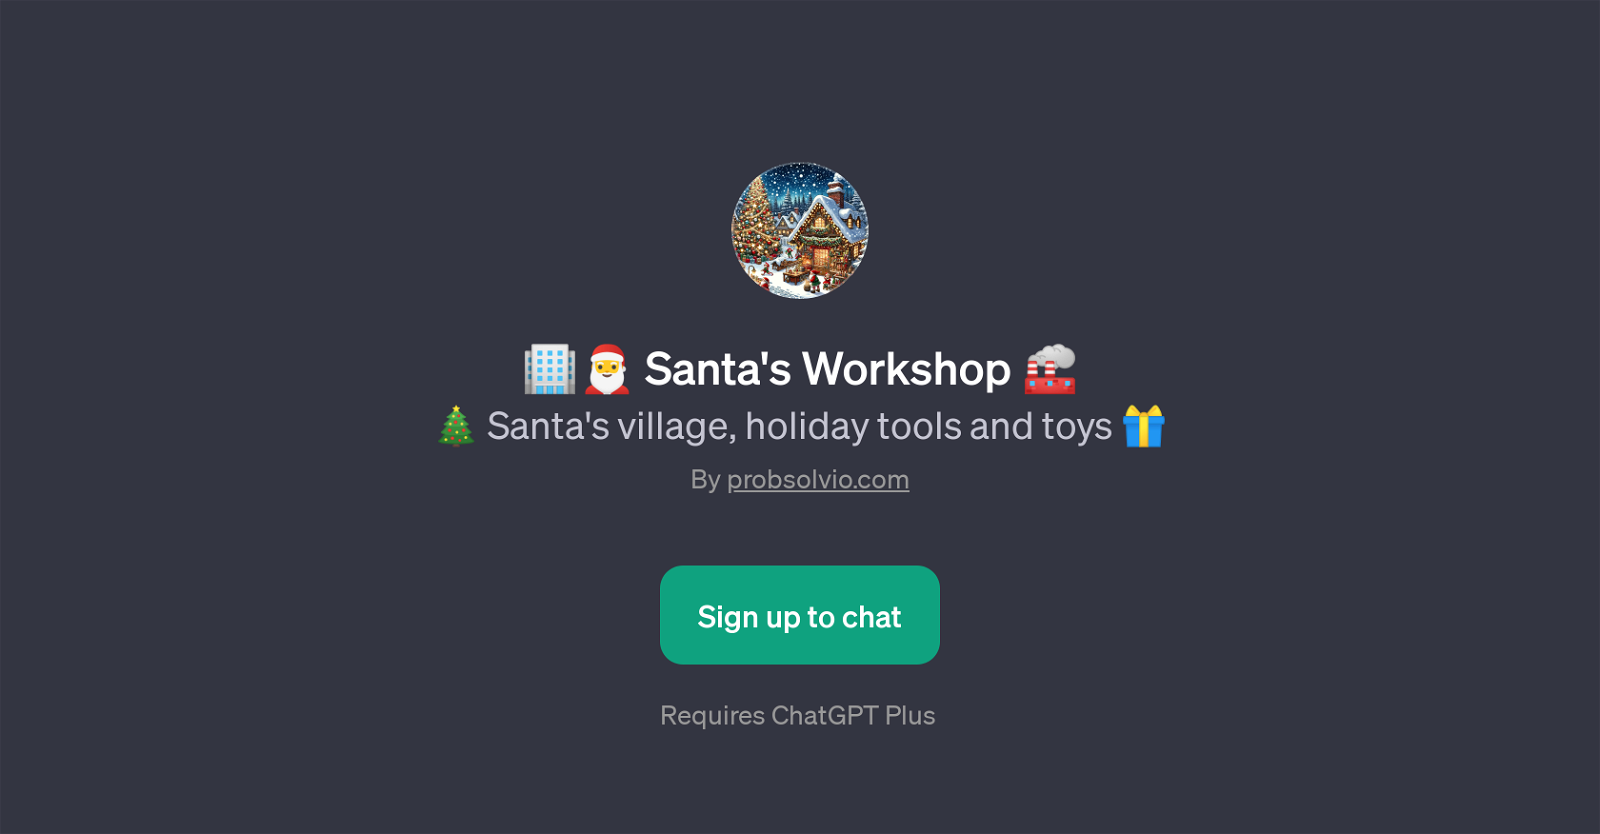 Santa's Workshop website